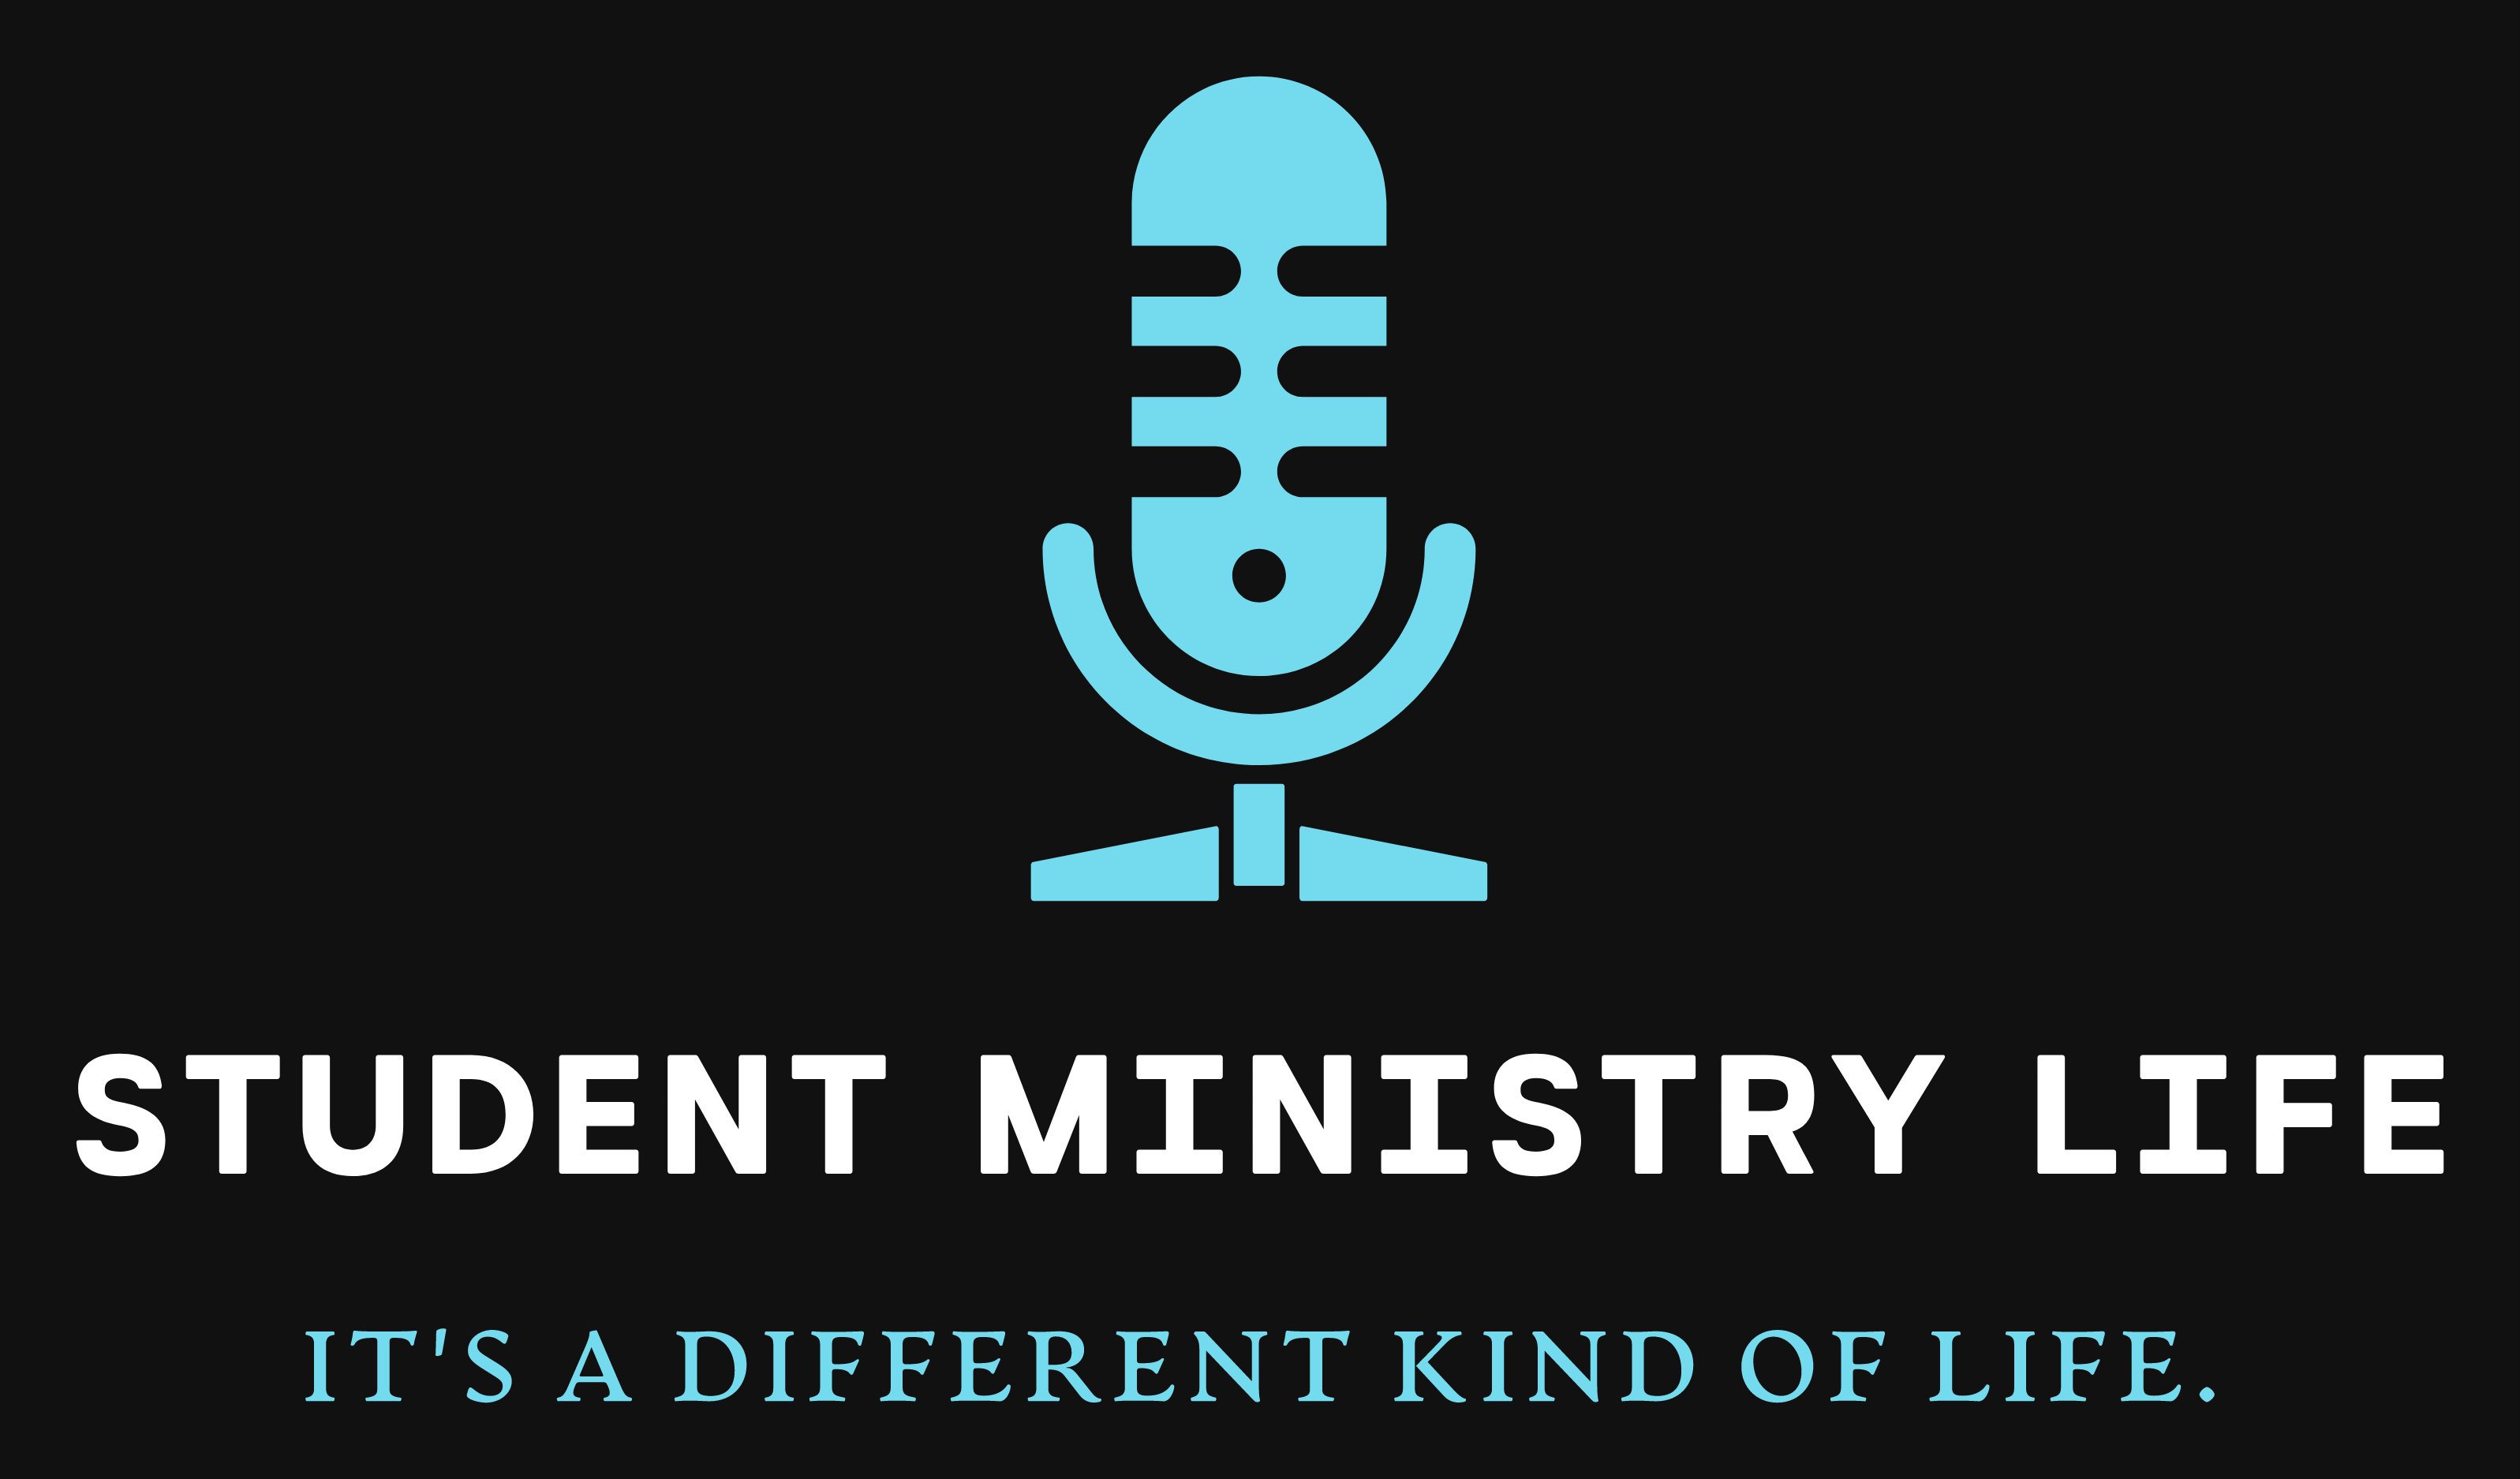 Student Ministry Life by Nick Ballard